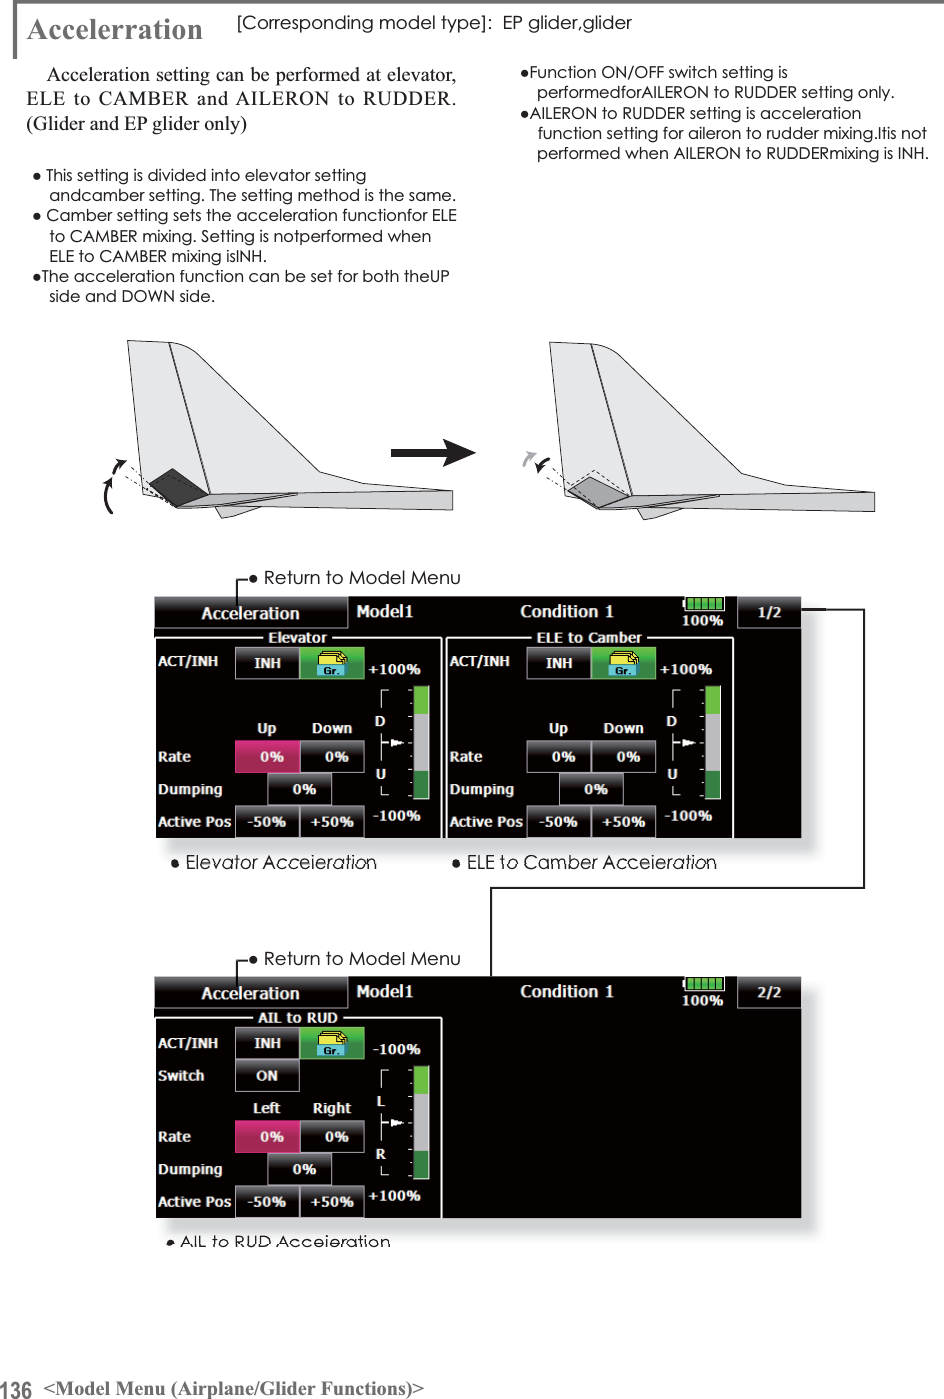 136 &lt;Model Menu (Airplane/Glider Functions)&gt;Accelerration &gt;&amp;RUUHVSRQGLQJPRGHOW\SH@(3JOLGHUJOLGHUAcceleration setting can be performed at elevator, ELE to CAMBER and AILERON to RUDDER.(Glider and EP glider only)ŏ7KLVVHWWLQJLVGLYLGHGLQWRHOHYDWRUVHWWLQJandcamber setting. The setting method is the same.ŏ&amp;DPEHUVHWWLQJVHWVWKHDFFHOHUDWLRQIXQFWLRQIRU(/(WR&amp;$0%(5PL[LQJ6HWWLQJLVQRWSHUIRUPHGZKHQ(/(WR&amp;$0%(5PL[LQJLV,1+ŏ7KHDFFHOHUDWLRQIXQFWLRQFDQEHVHWIRUERWKWKH83VLGHDQG&apos;2:1VLGHŏ)XQFWLRQ212))VZLWFKVHWWLQJLVSHUIRUPHGIRU$,/(521WR58&apos;&apos;(5VHWWLQJRQO\ŏ$,/(521WR58&apos;&apos;(5VHWWLQJLVDFFHOHUDWLRQIXQFWLRQVHWWLQJIRUDLOHURQWRUXGGHUPL[LQJ,WLVQRWSHUIRUPHGZKHQ$,/(521WR58&apos;&apos;(5PL[LQJLV,1+ŏ5HWXUQWR0RGHO0HQXŏ5HWXUQWR0RGHO0HQXŏ(OHYDWRU$FFHLHUDWLRQŏ(/(WR&amp;DPEHU$FFHLHUDWLRQŏ$,/WR58&apos;$FFHLHUDWLRQ